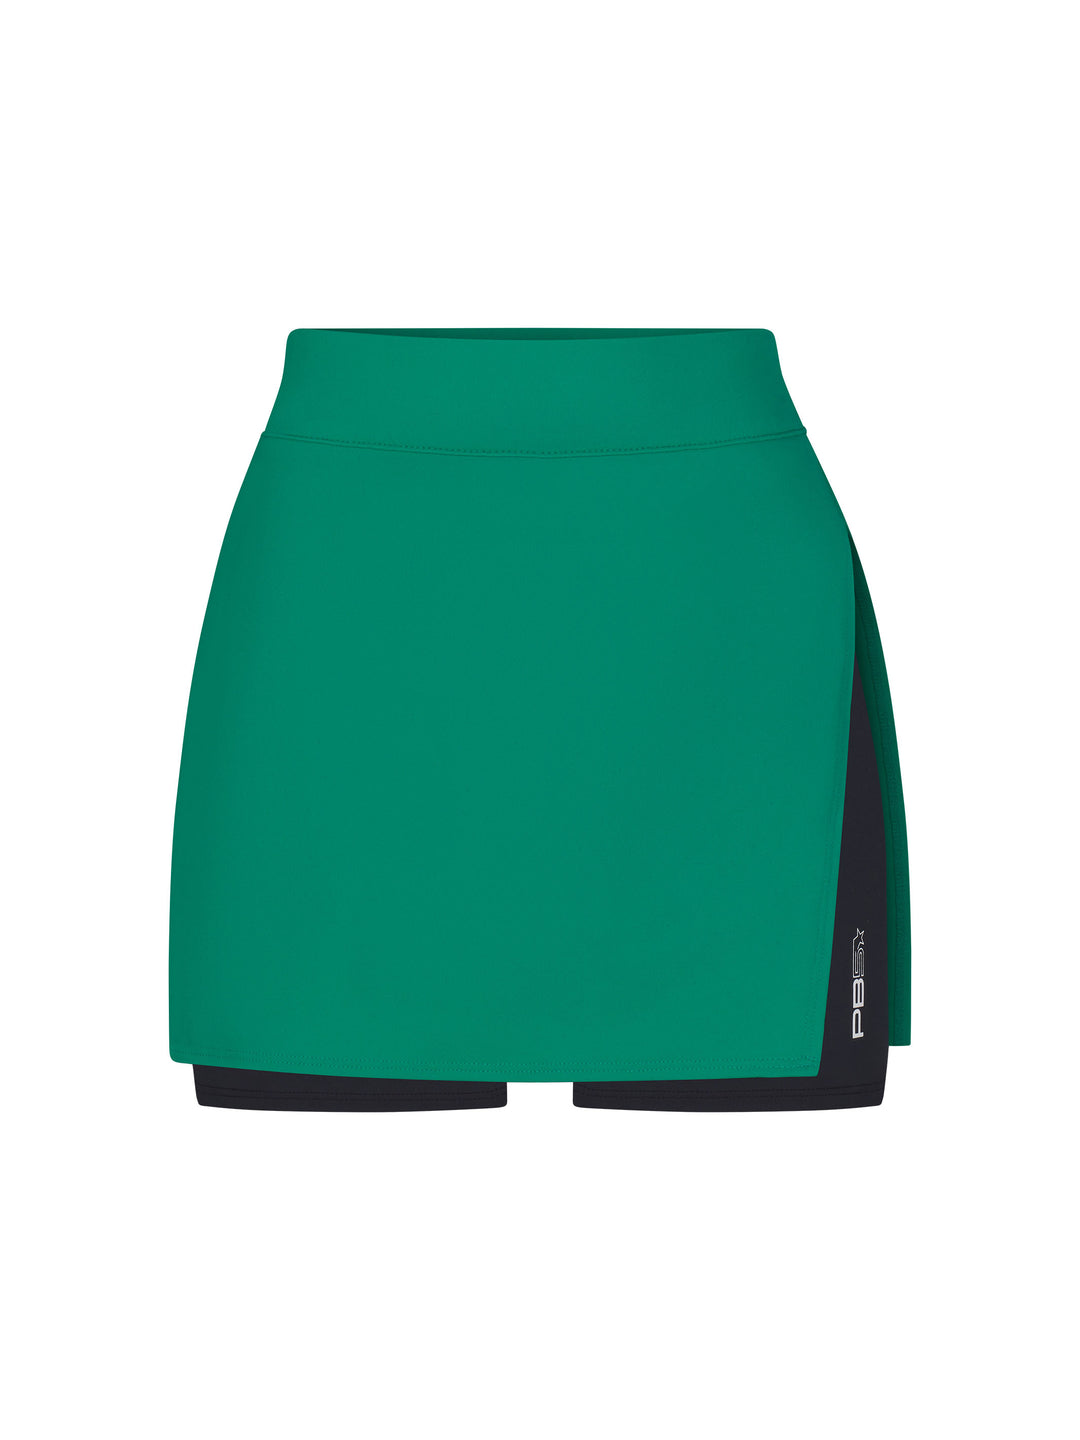 Side Split Skirt front view in jade and black. Small logo on left leg.